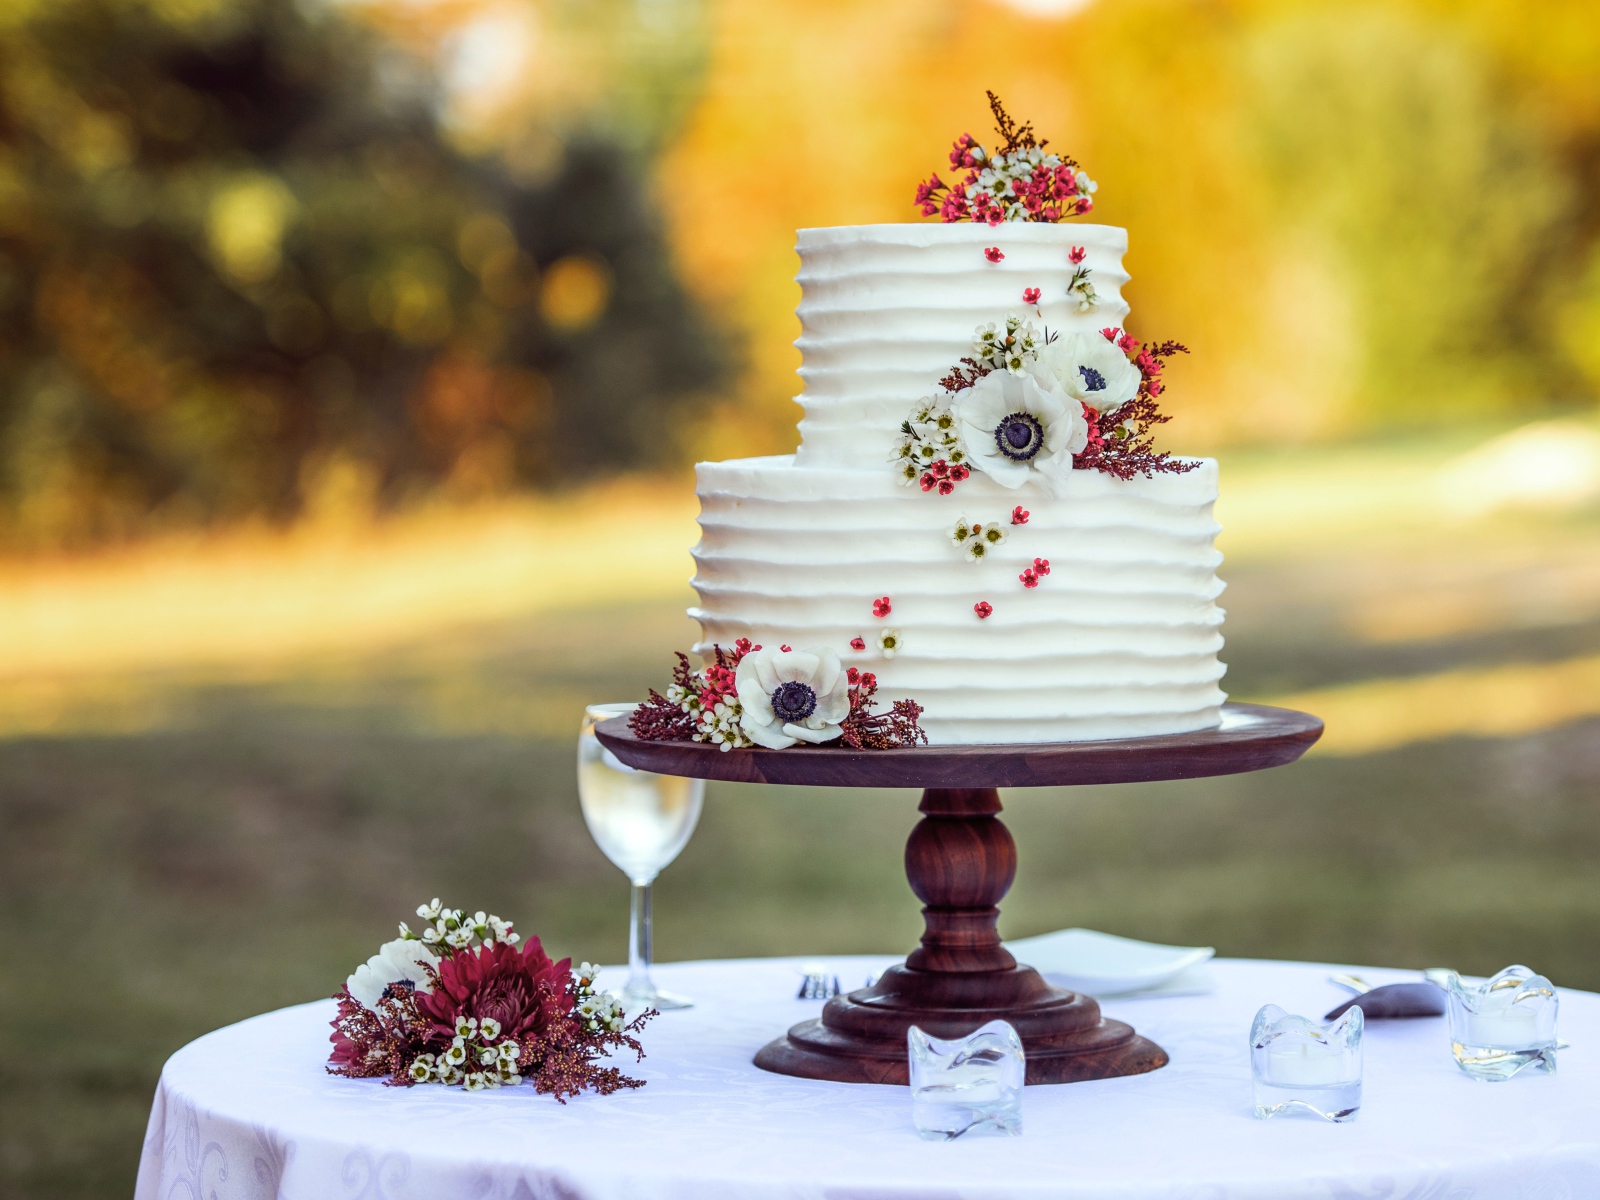 Beautiful wedding cake with flowers